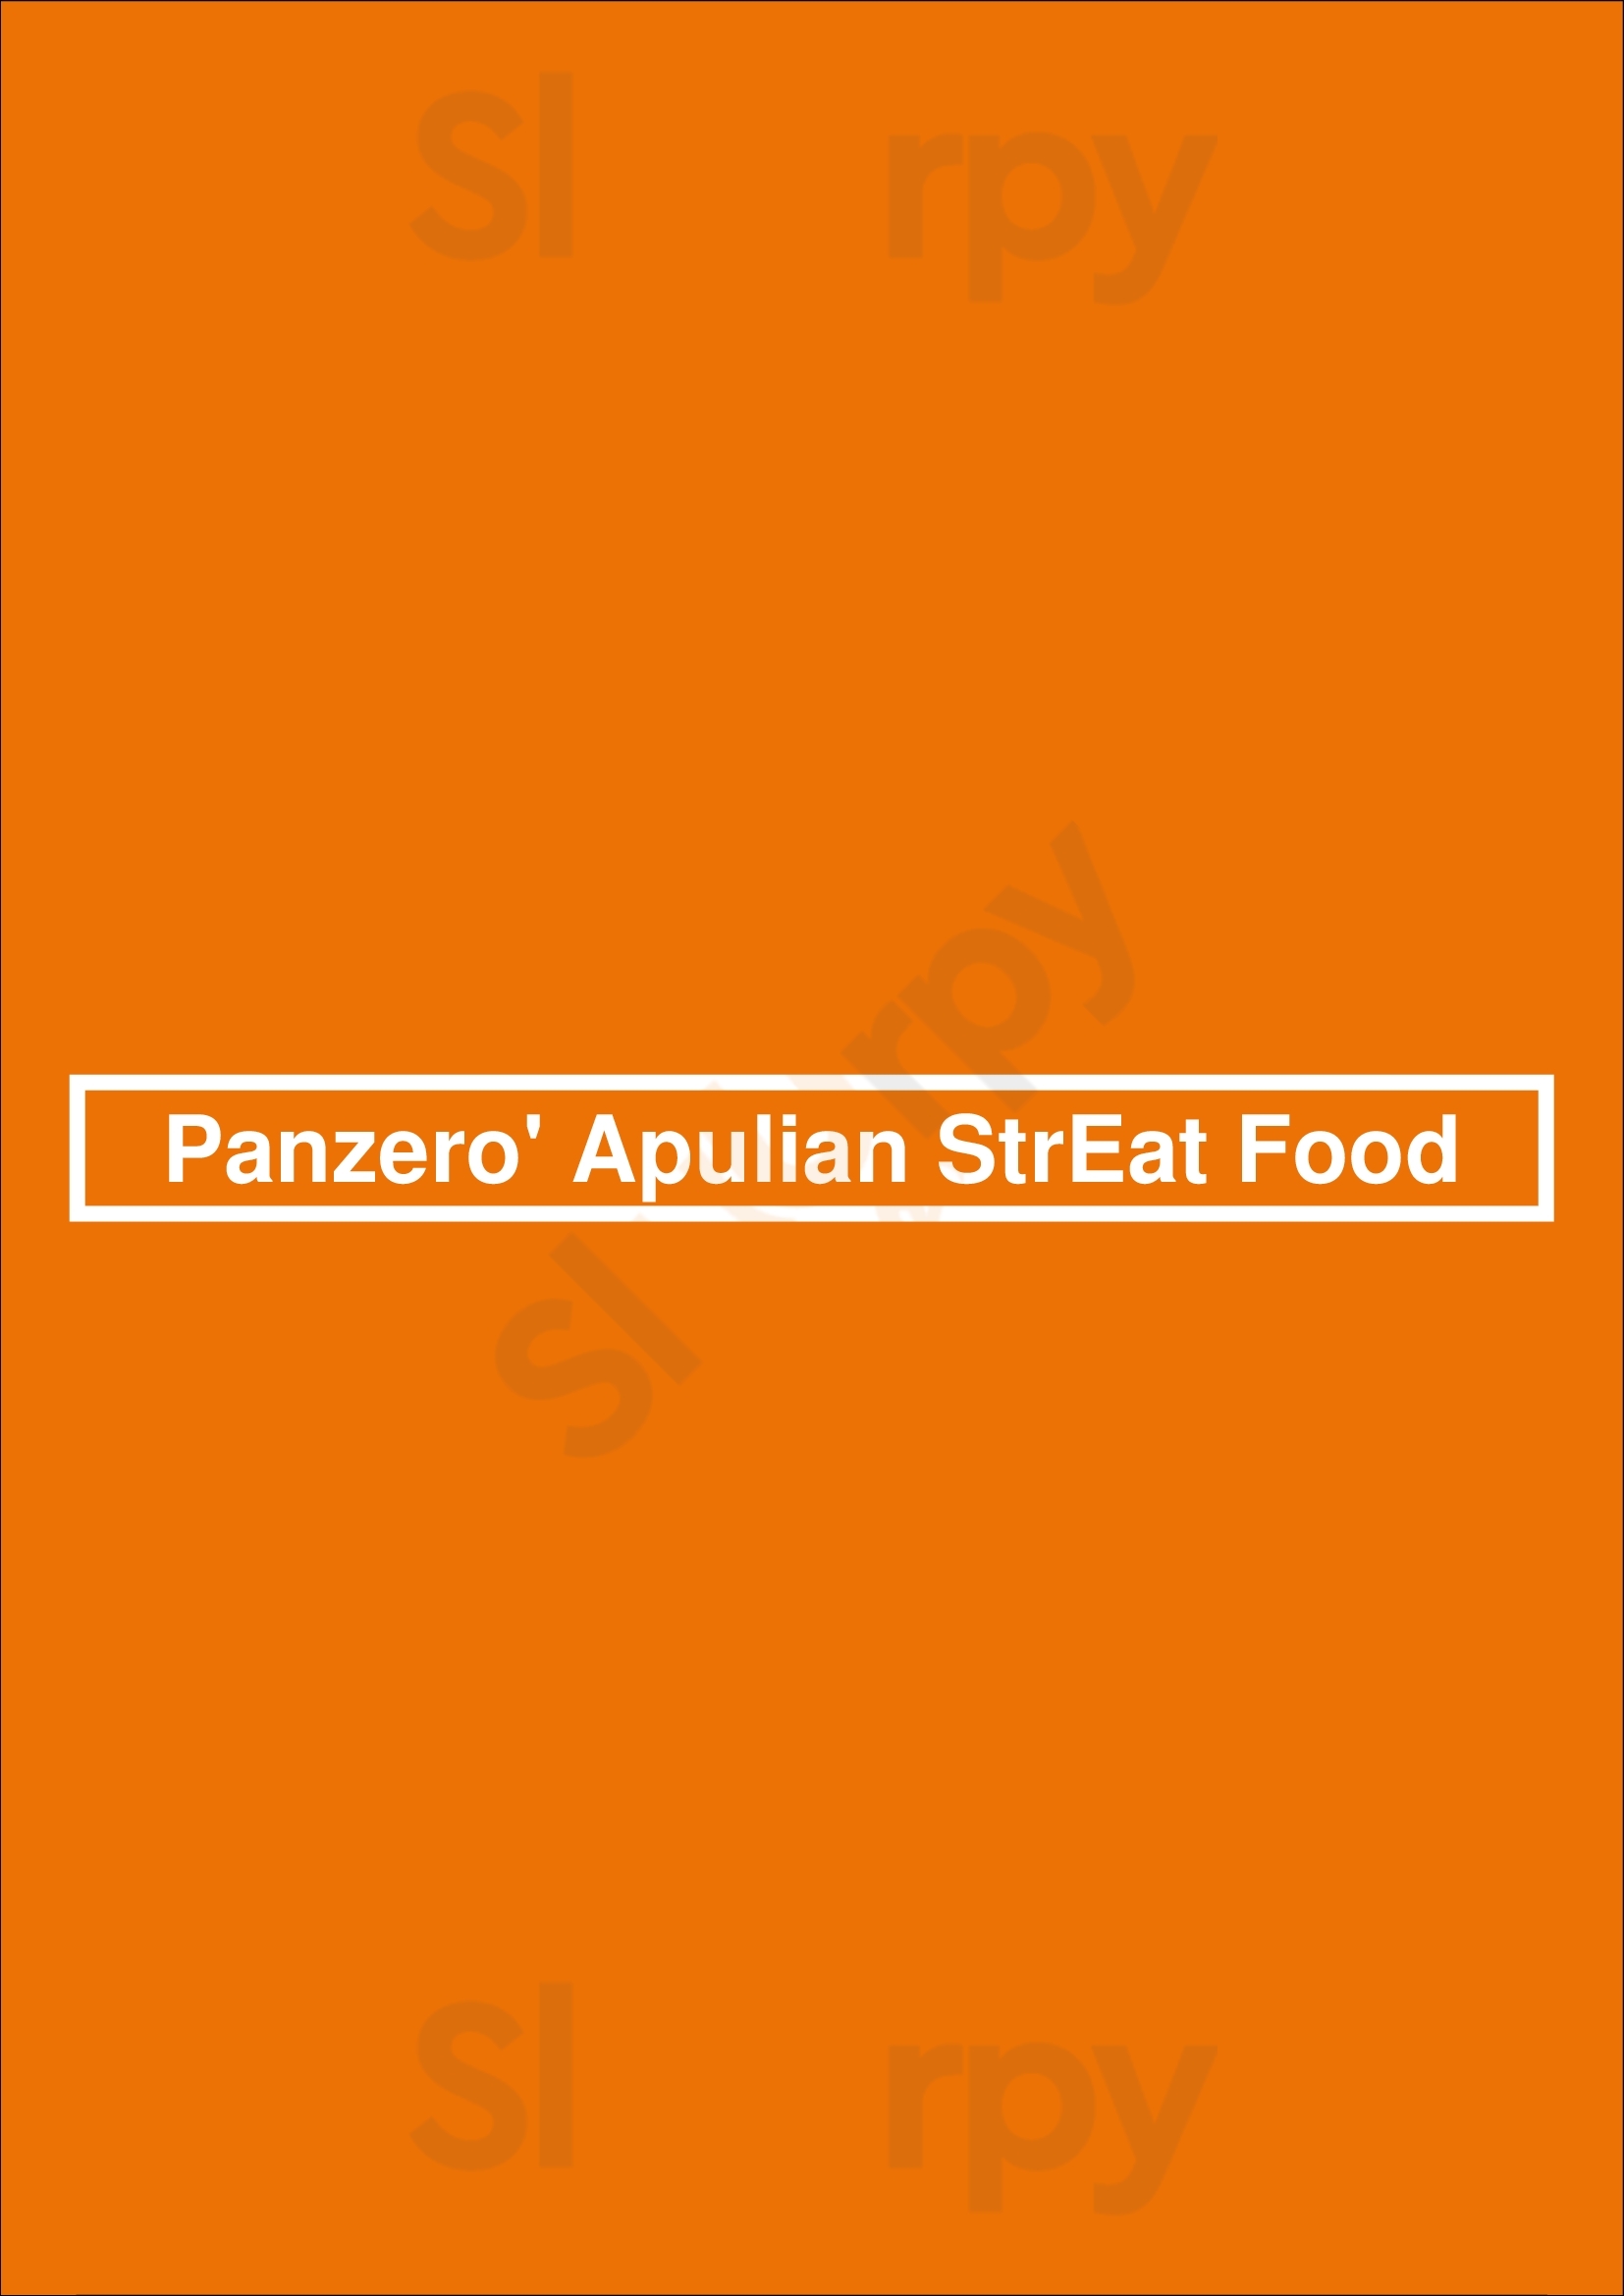 Panzero' Apulian Streat Food Rotterdam Menu - 1